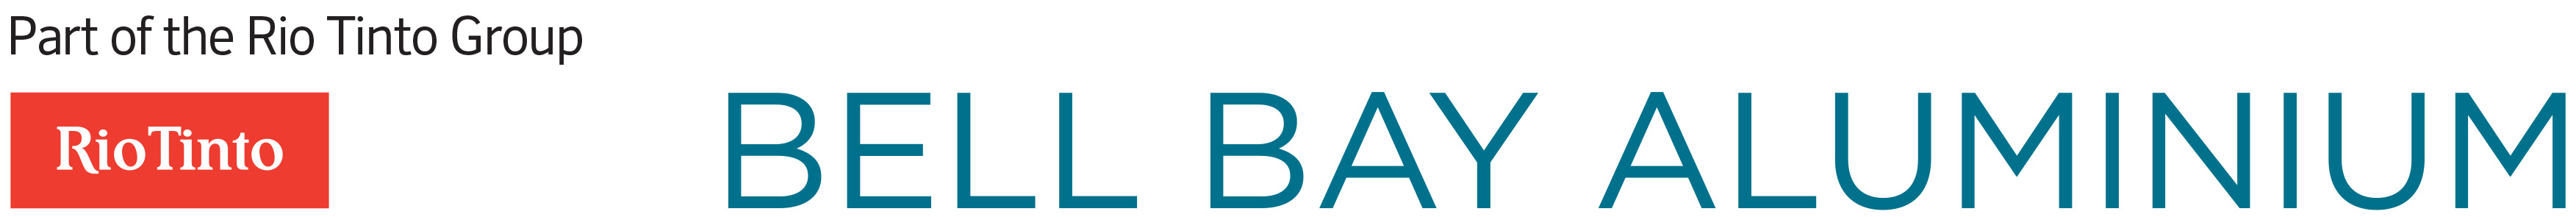 Bell Bay Aluminium logo